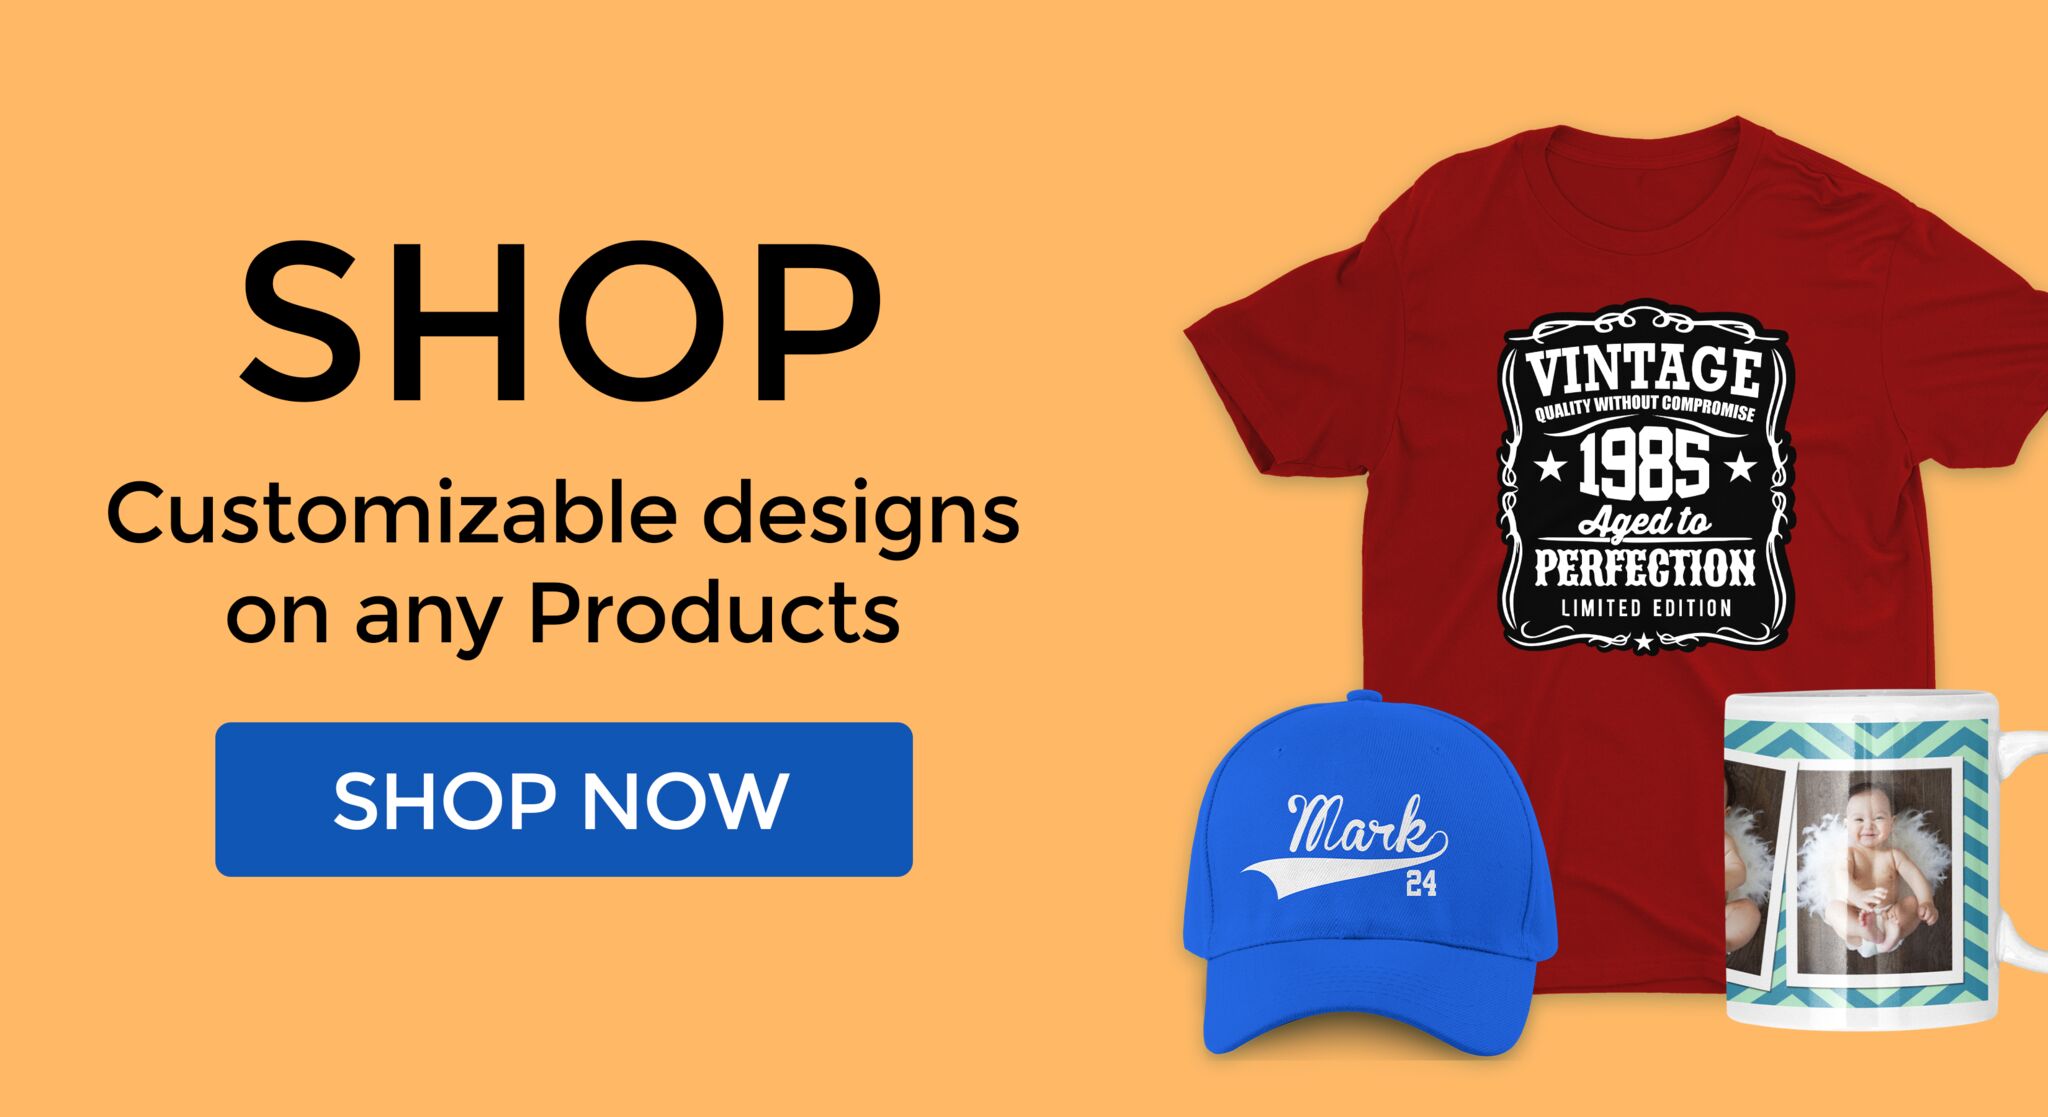 Custom T-Shirts - Design Your Own T-Shirts Online - Rush Printing! Transfer  it!